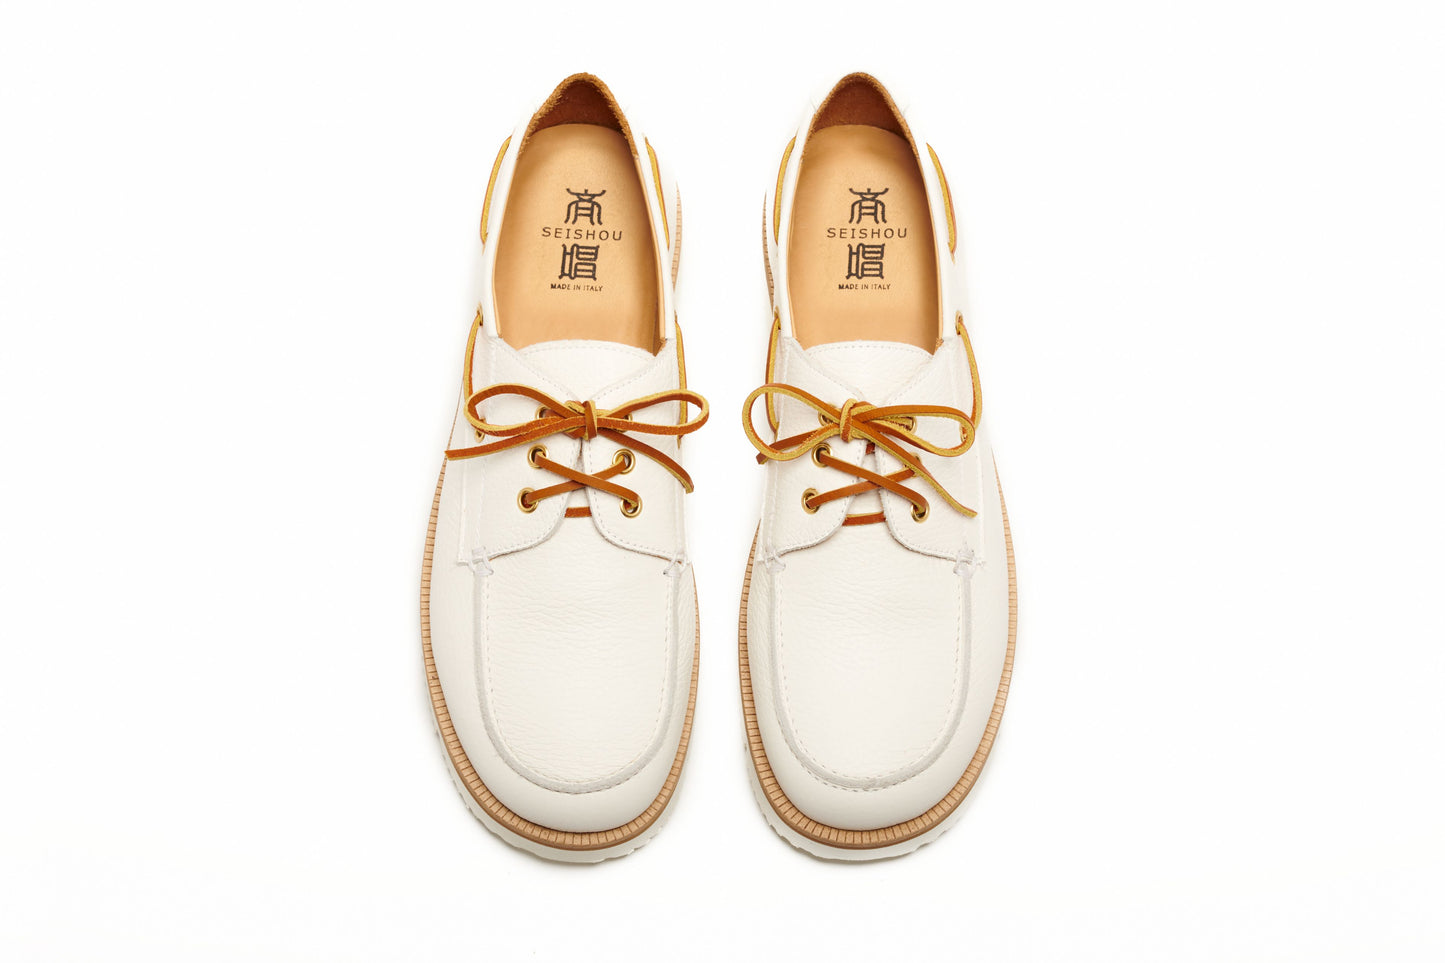 Hopkins Men's Boat Shoes - White